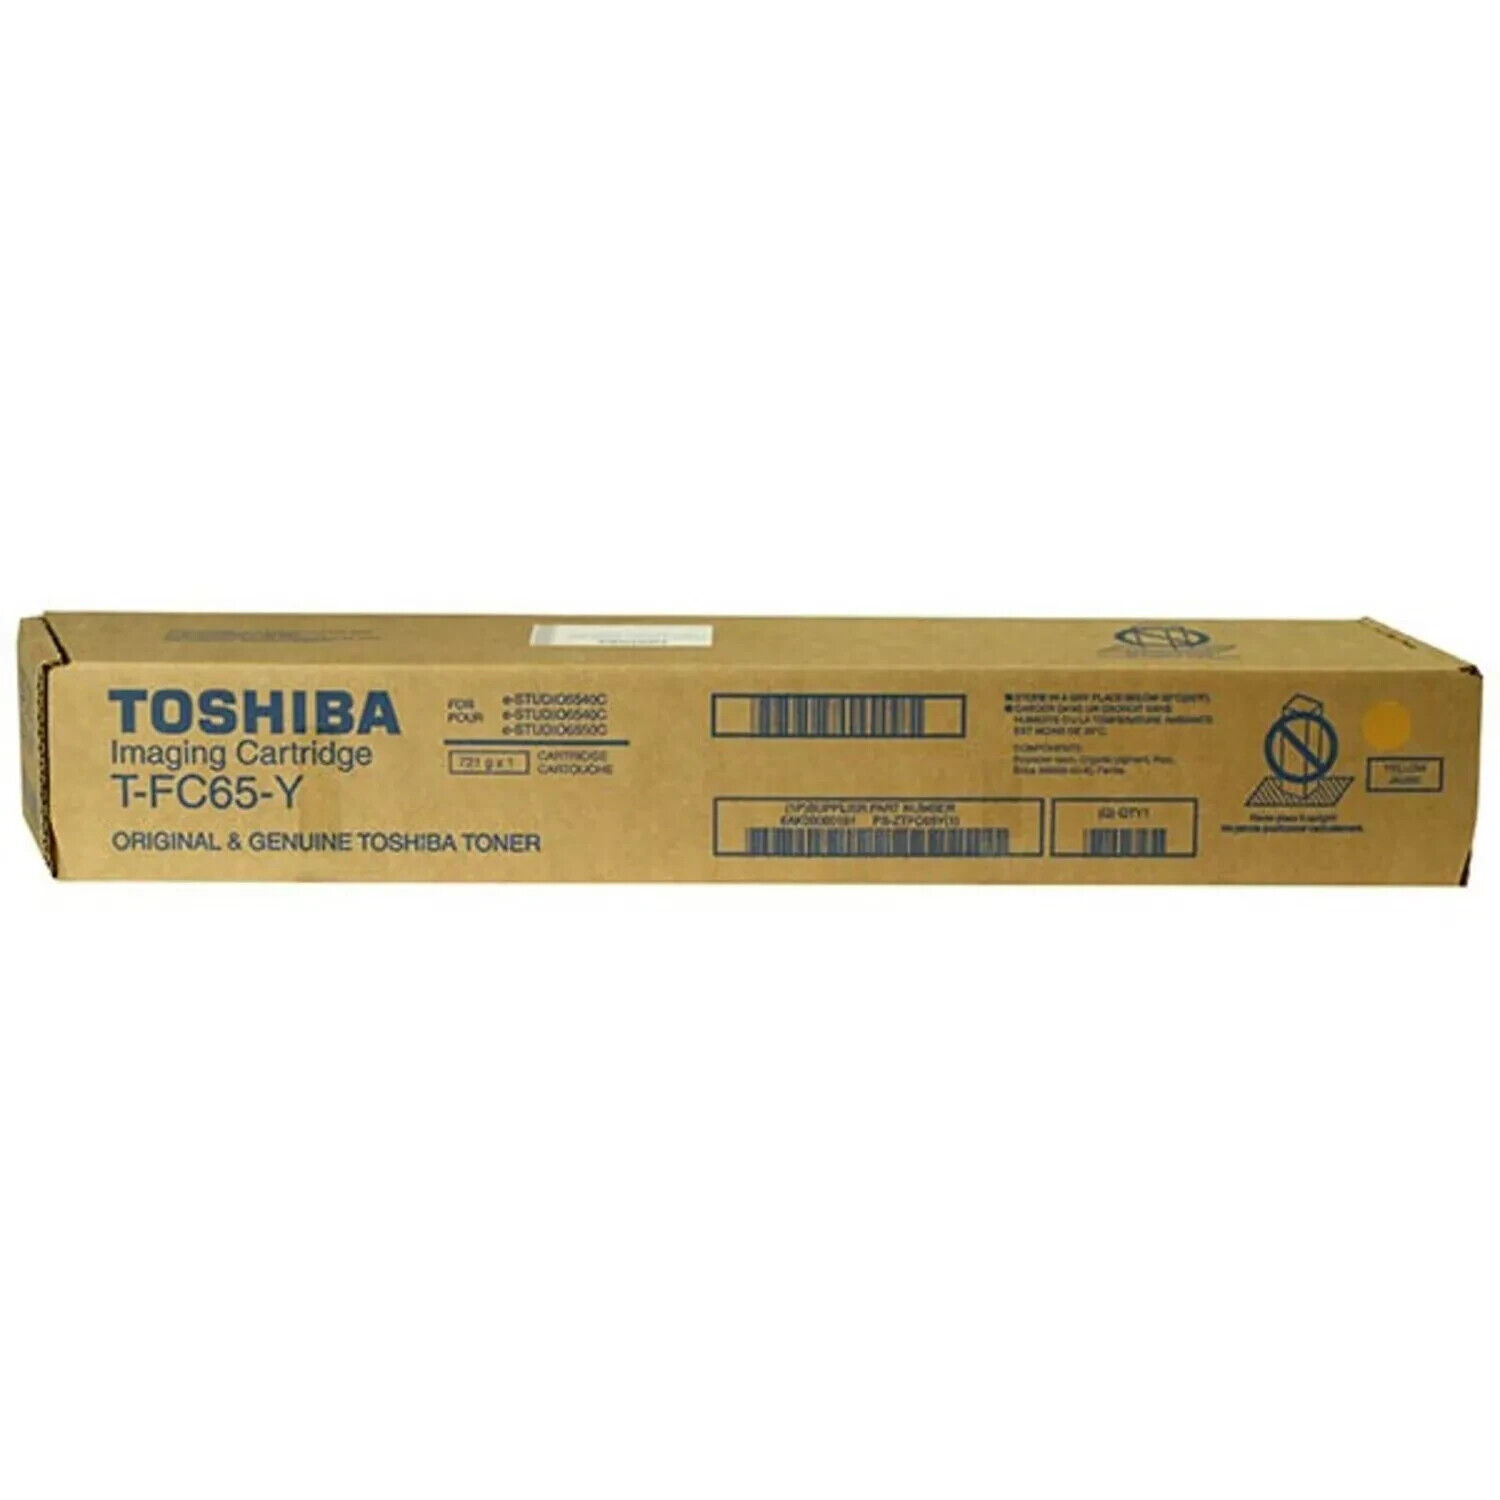 Genuine Toshiba T-FC65-Y Yellow Toner Cartridge ***FREE SHIPPING***